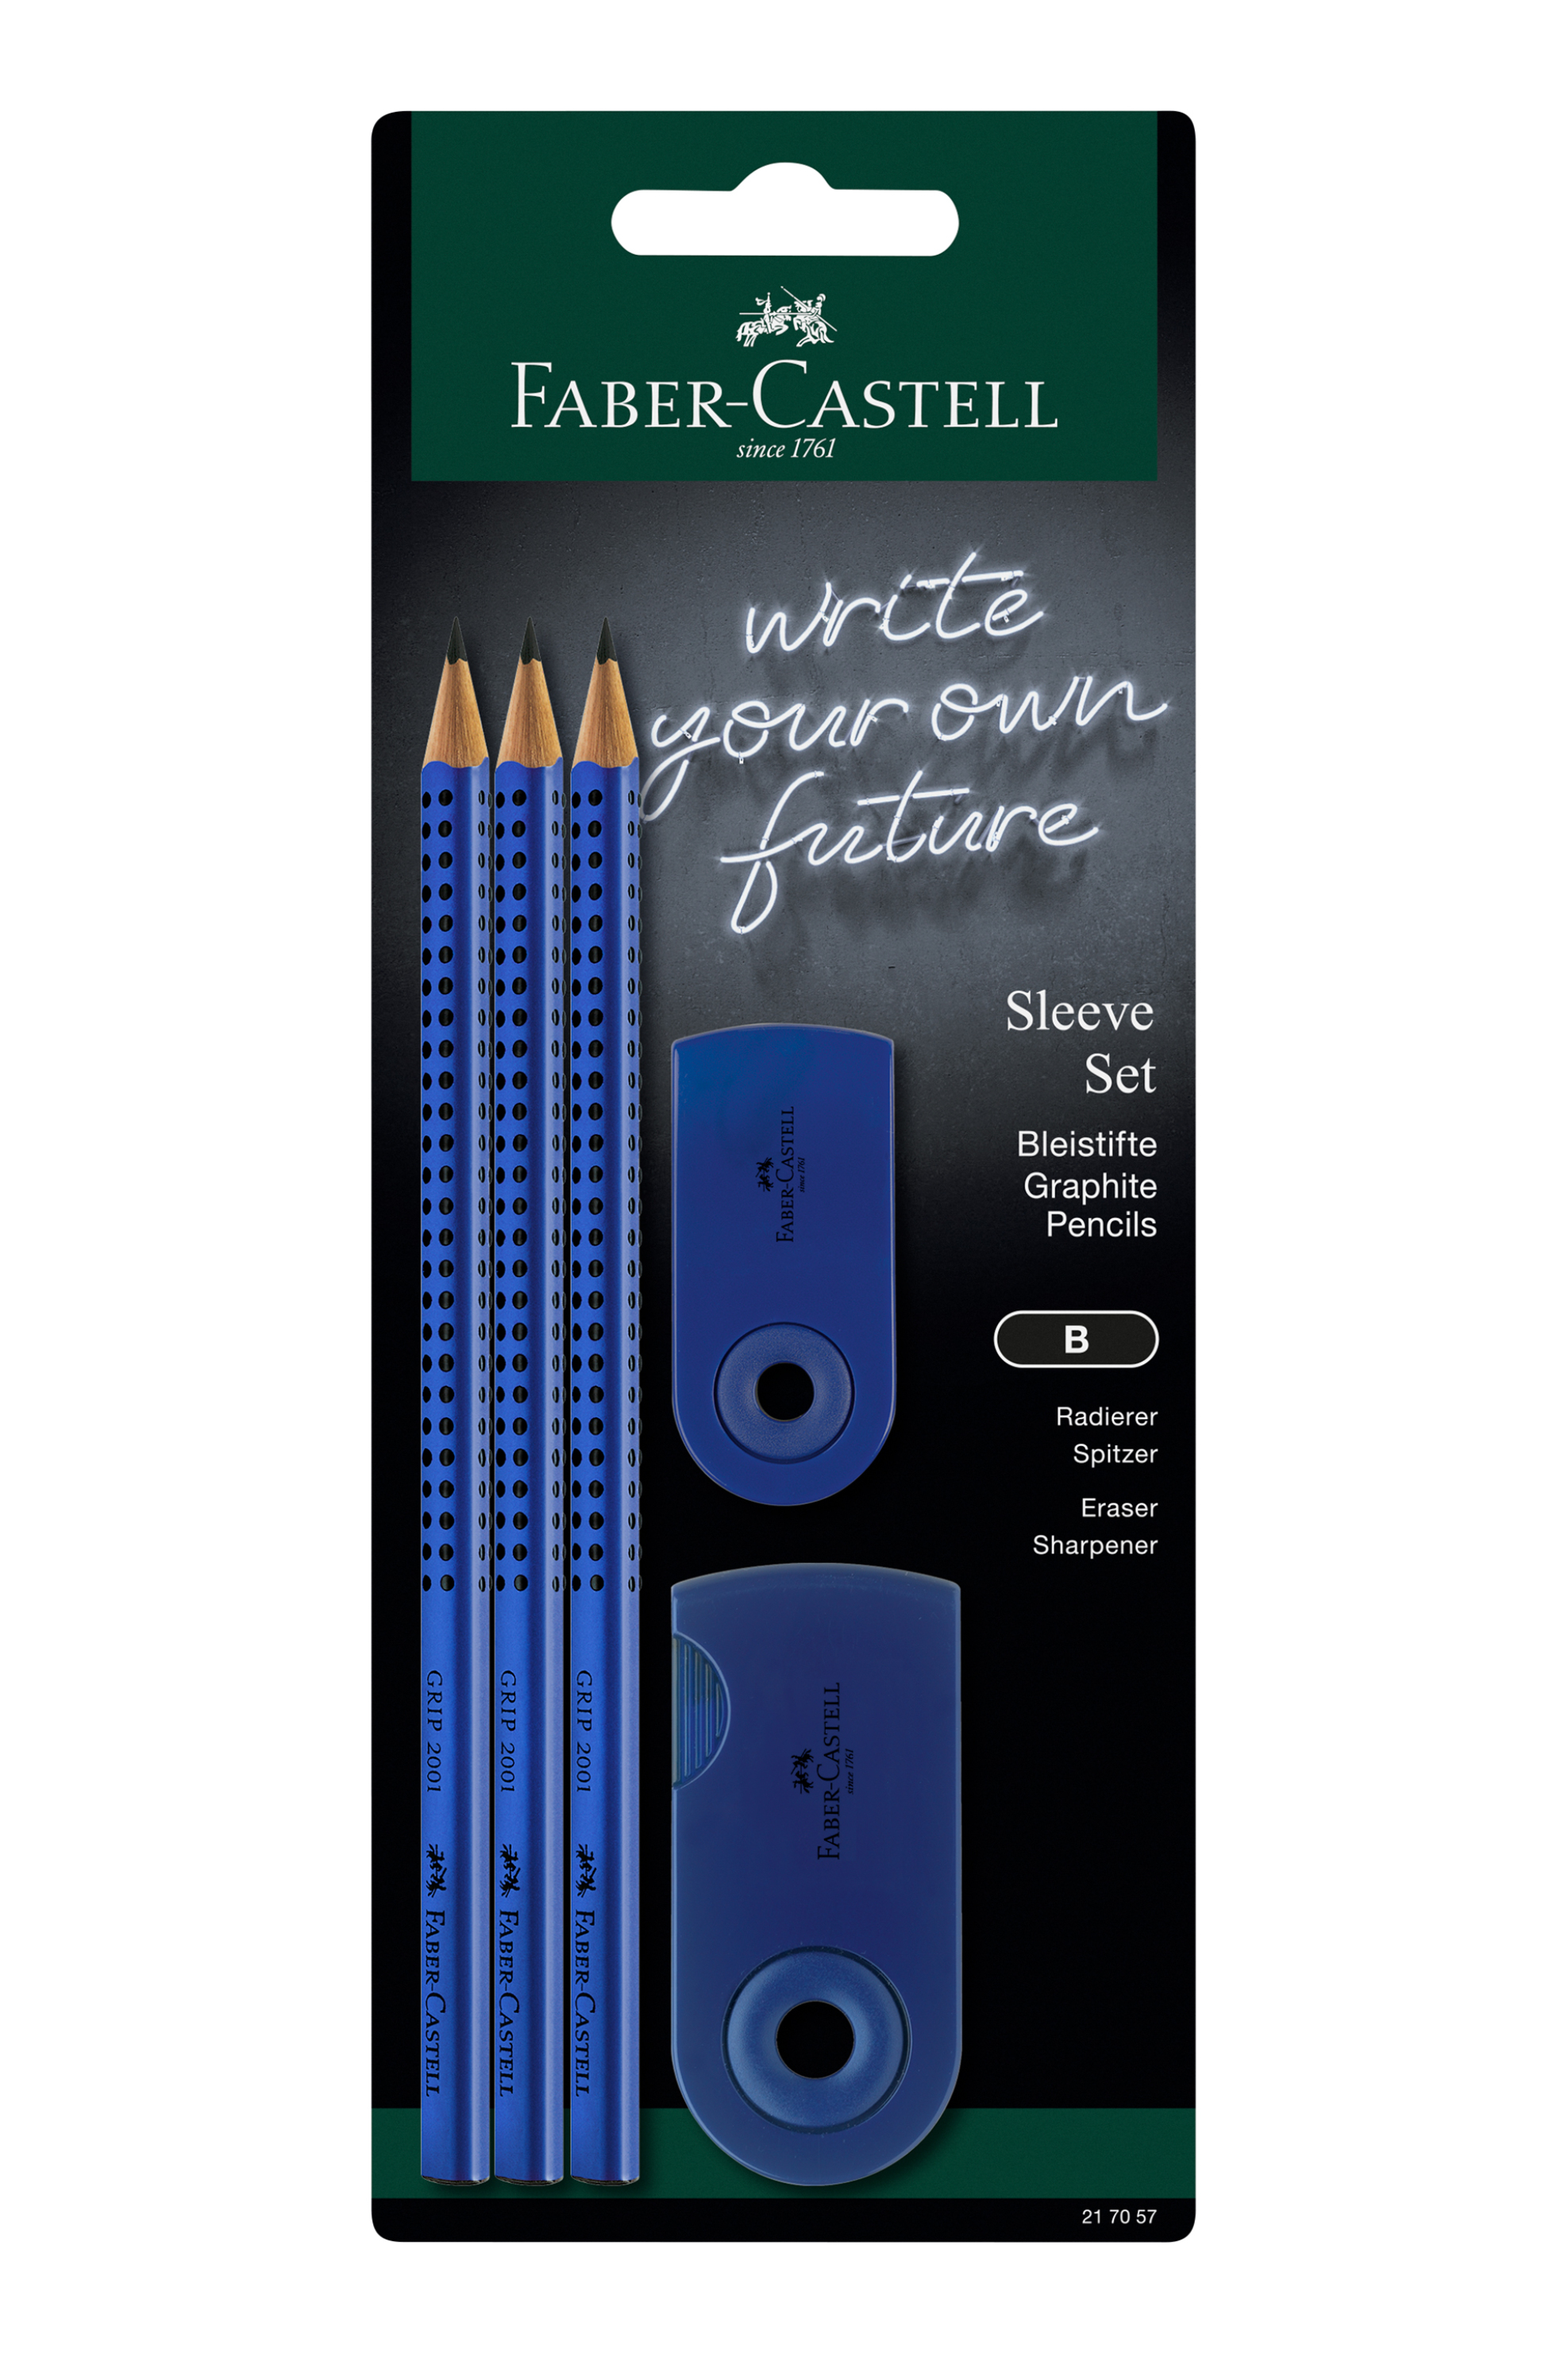 Home > ΔΙΑΚΟΣΜΗΣΗ > Γραφείο > Γραφική Ύλη > Μολύβια Faber-Castell Blister προσφοράς μπλε Grip-Sleeve, δώρο 2 μολύβια - 077217057/